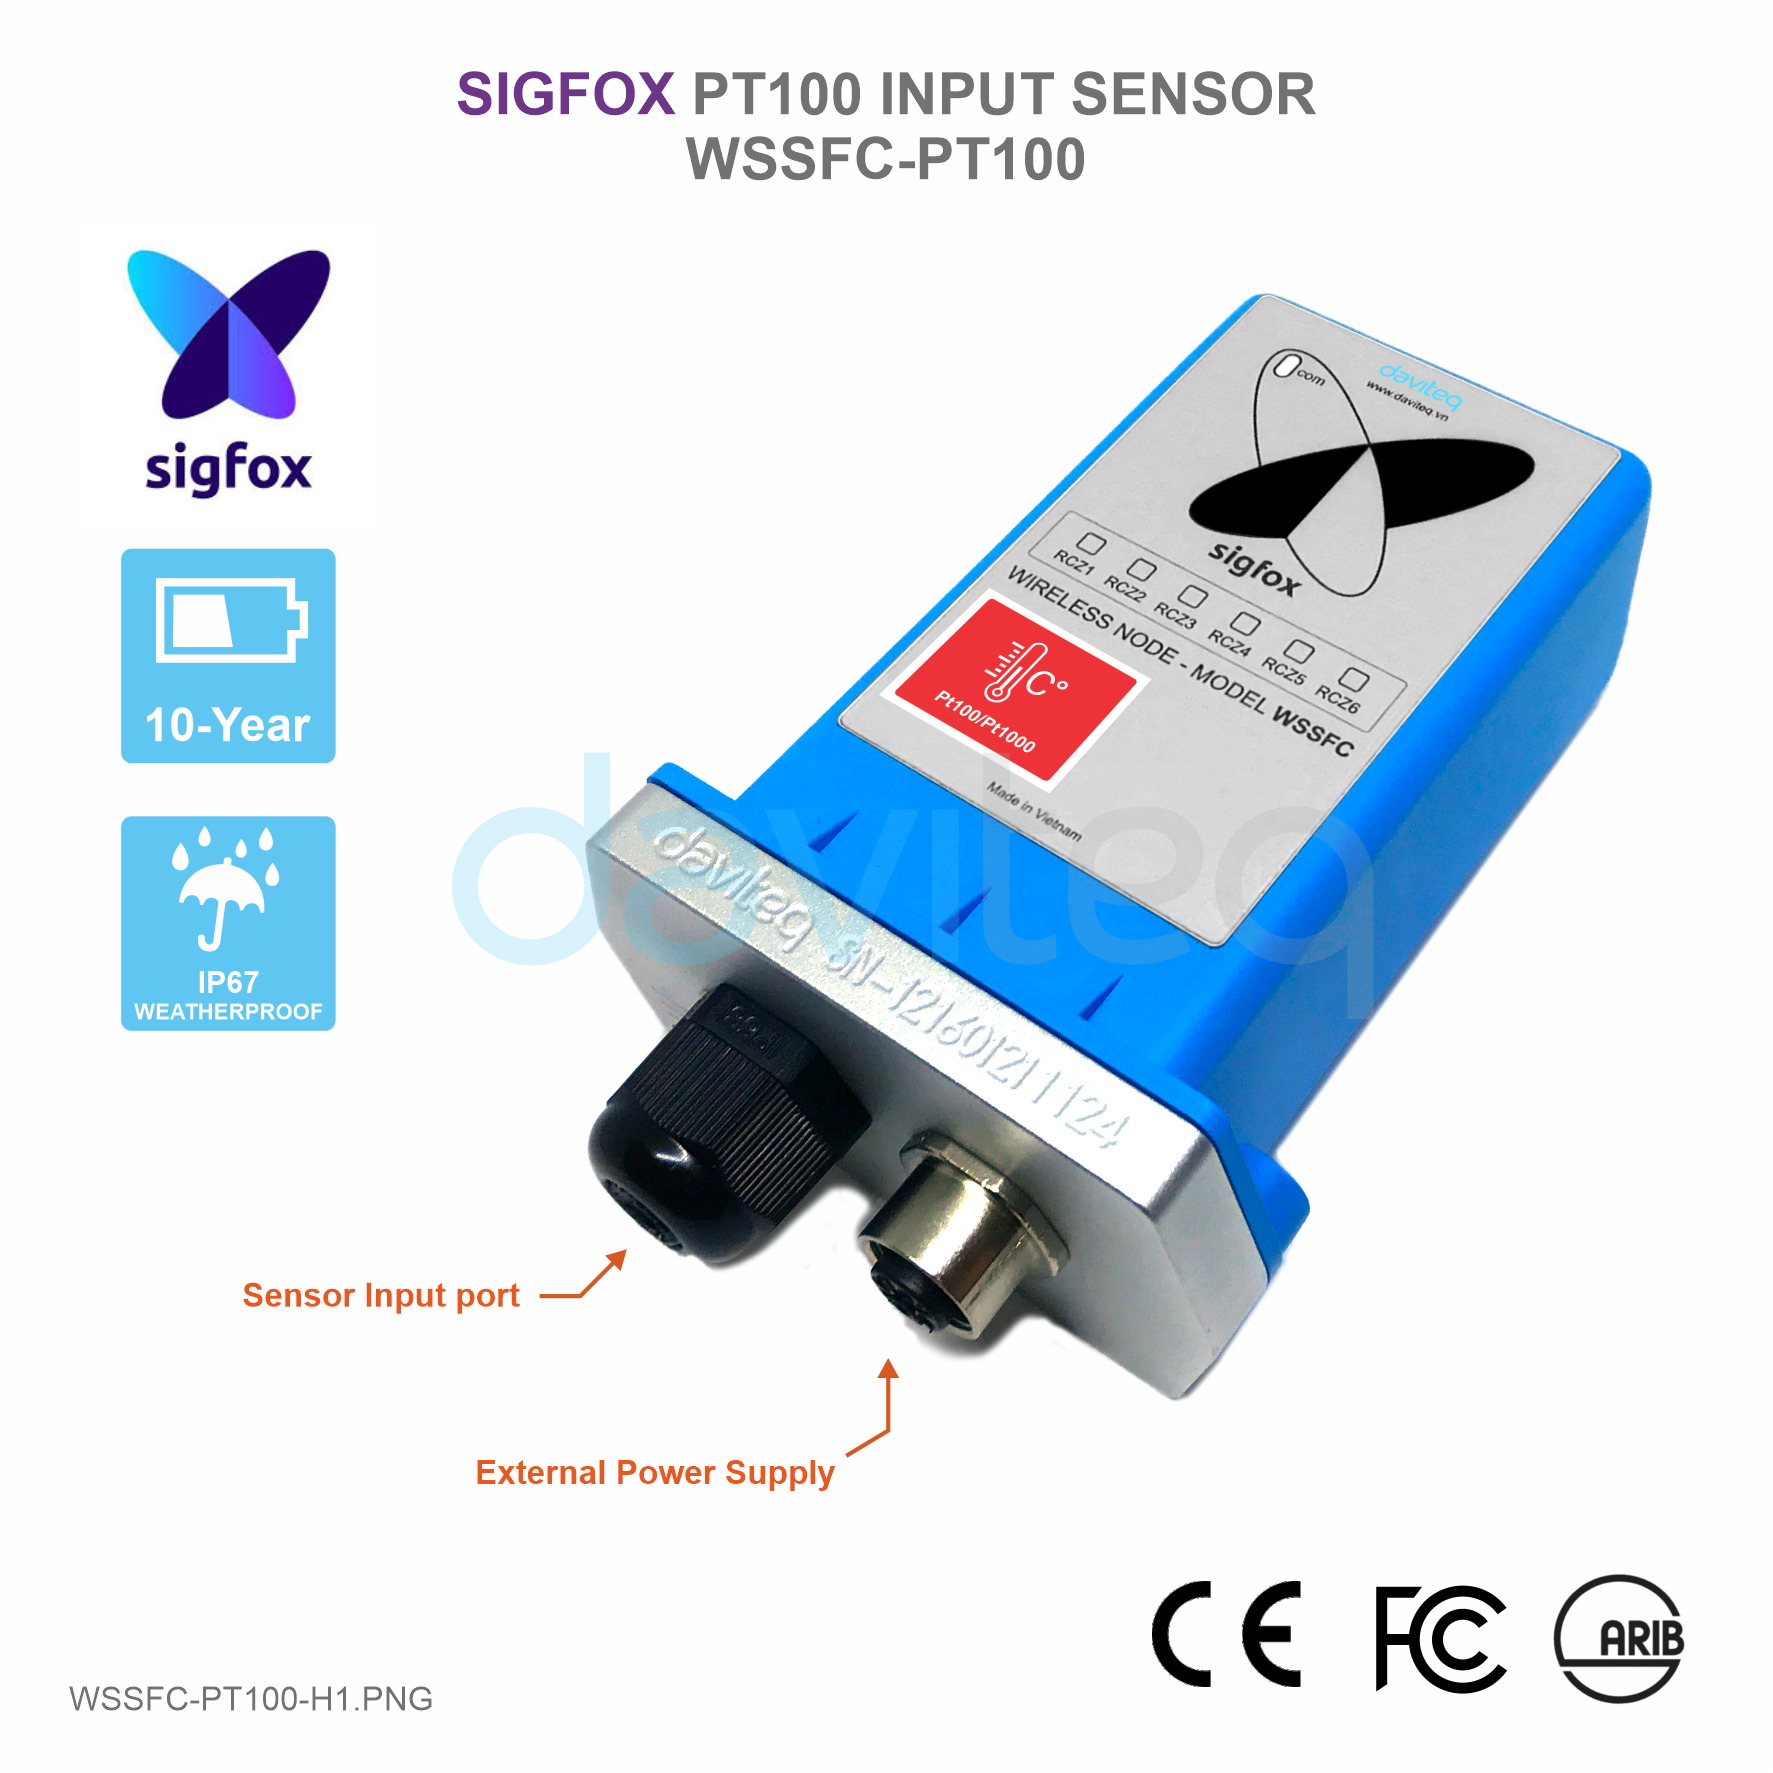 Sigfox PT100 Input Sensor